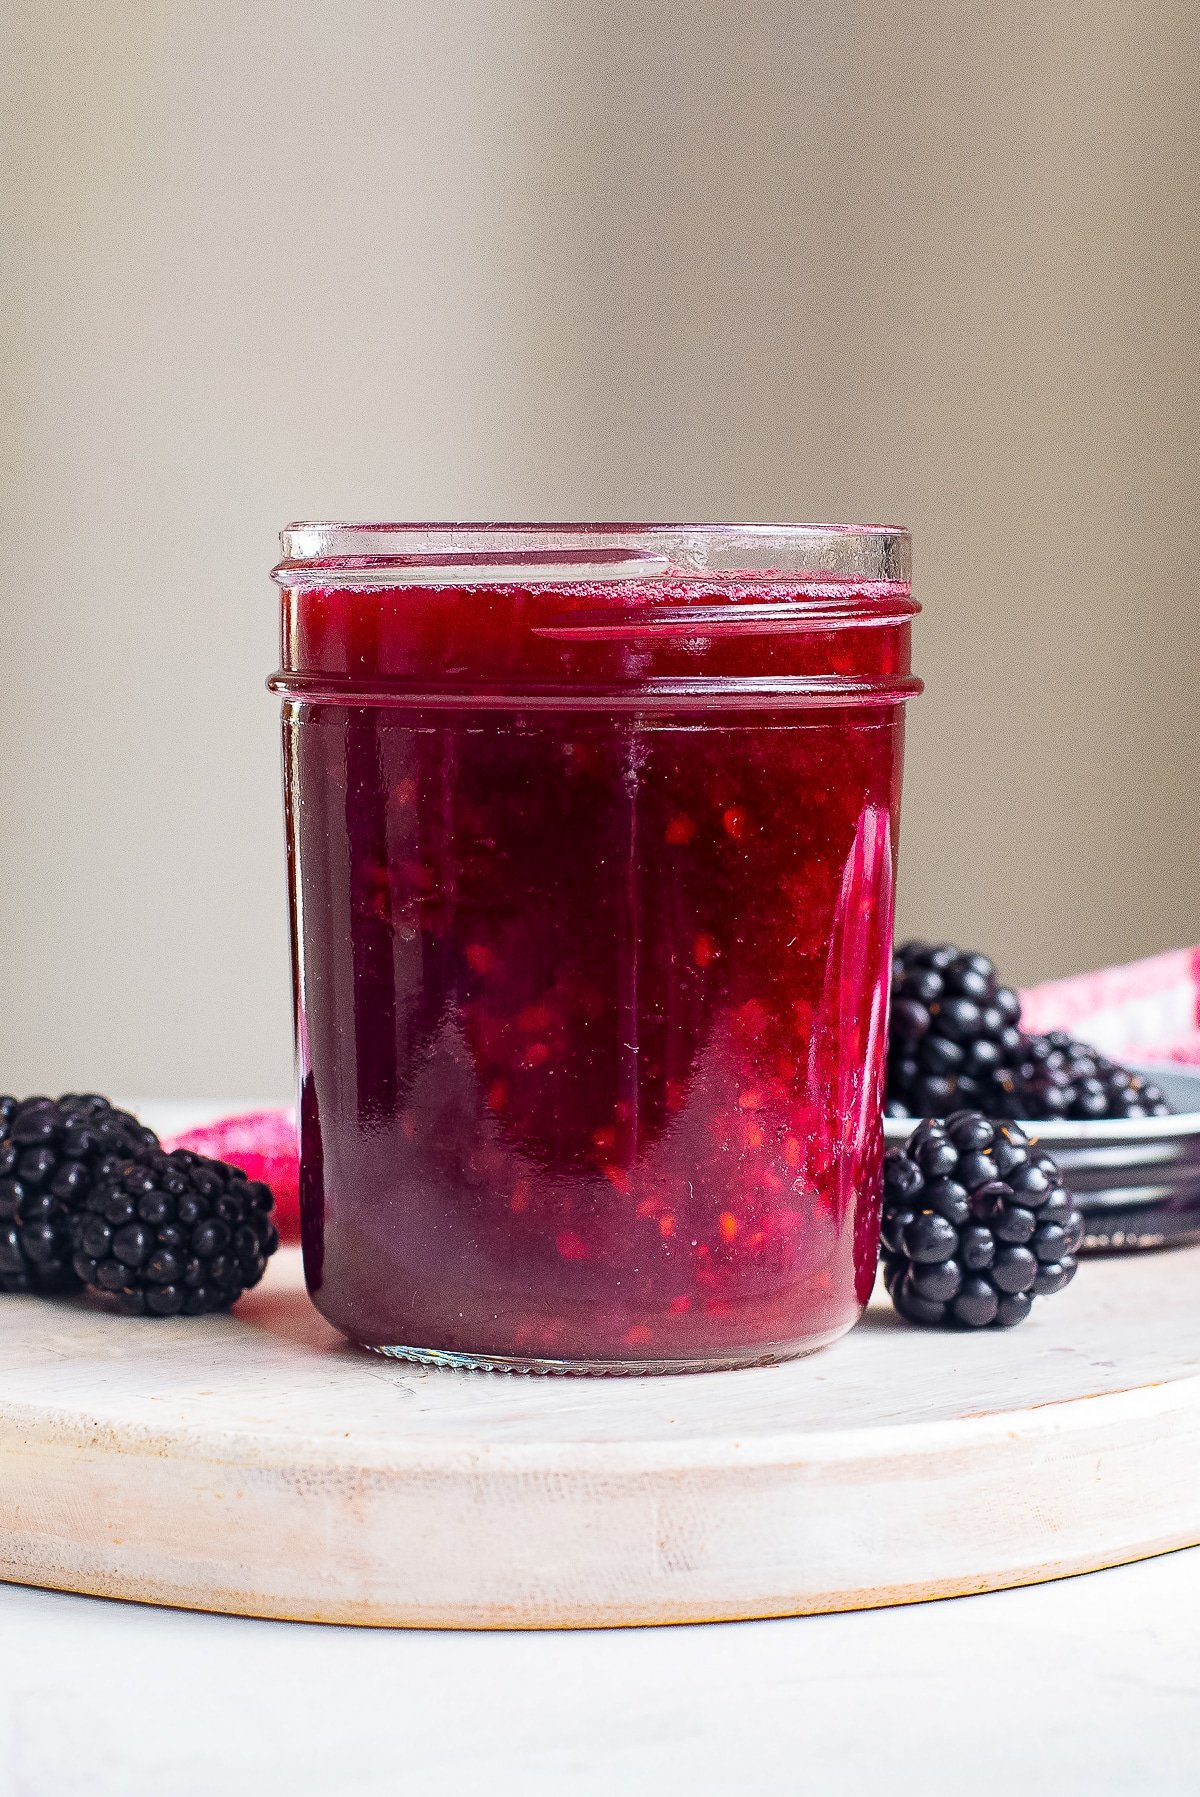 blackberry sauce in a mason jar